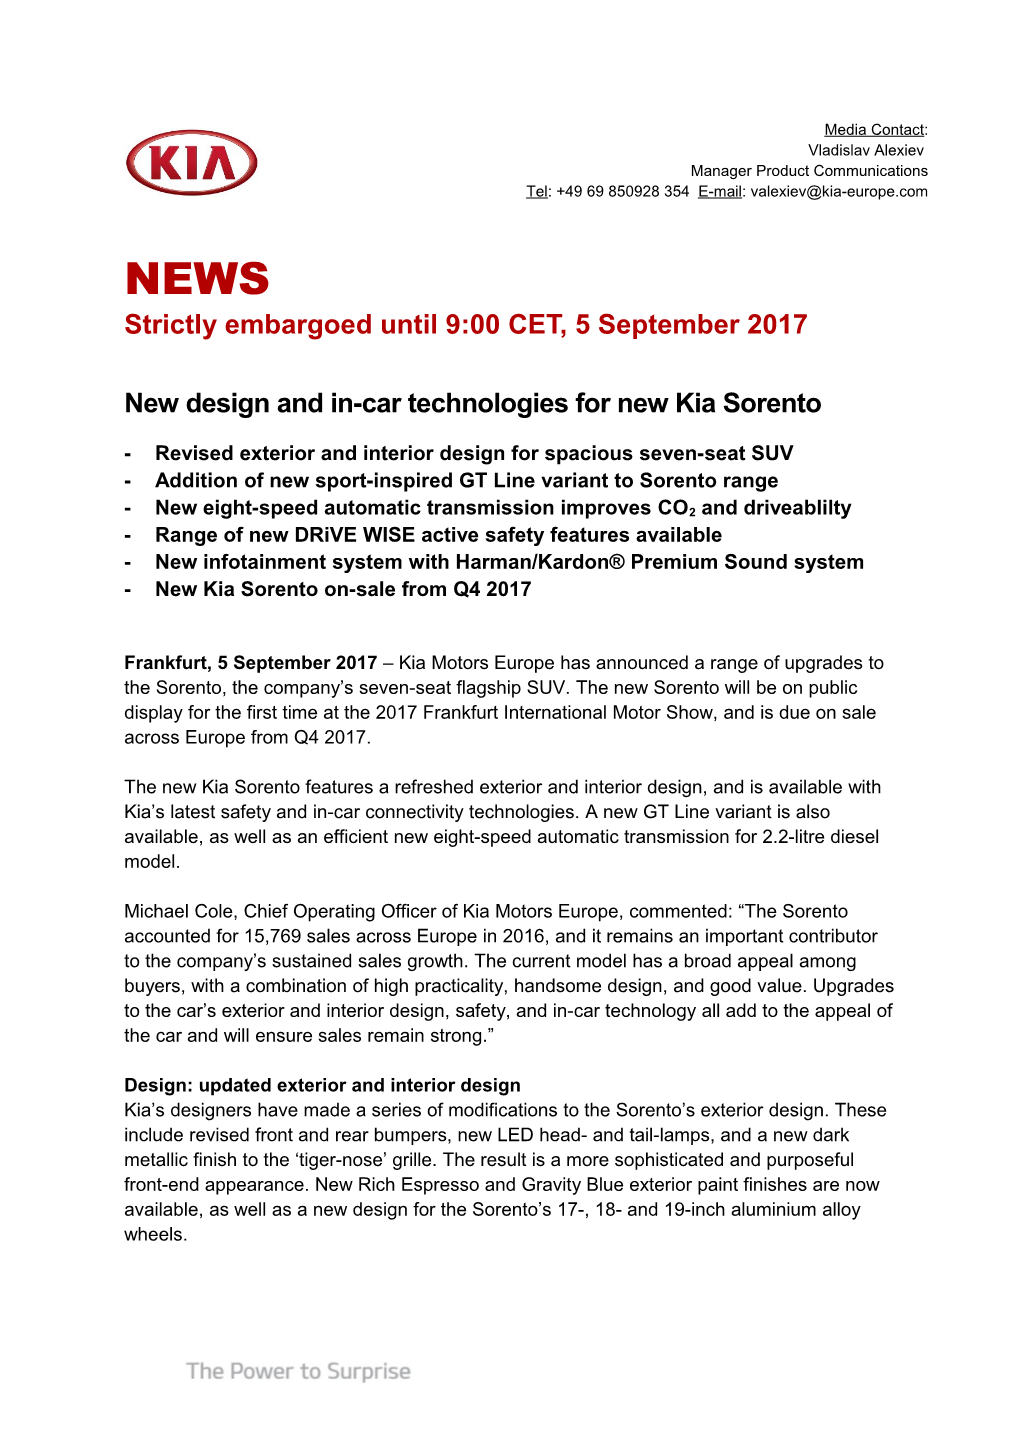 New Design and In-Car Technologies for New Kia Sorento